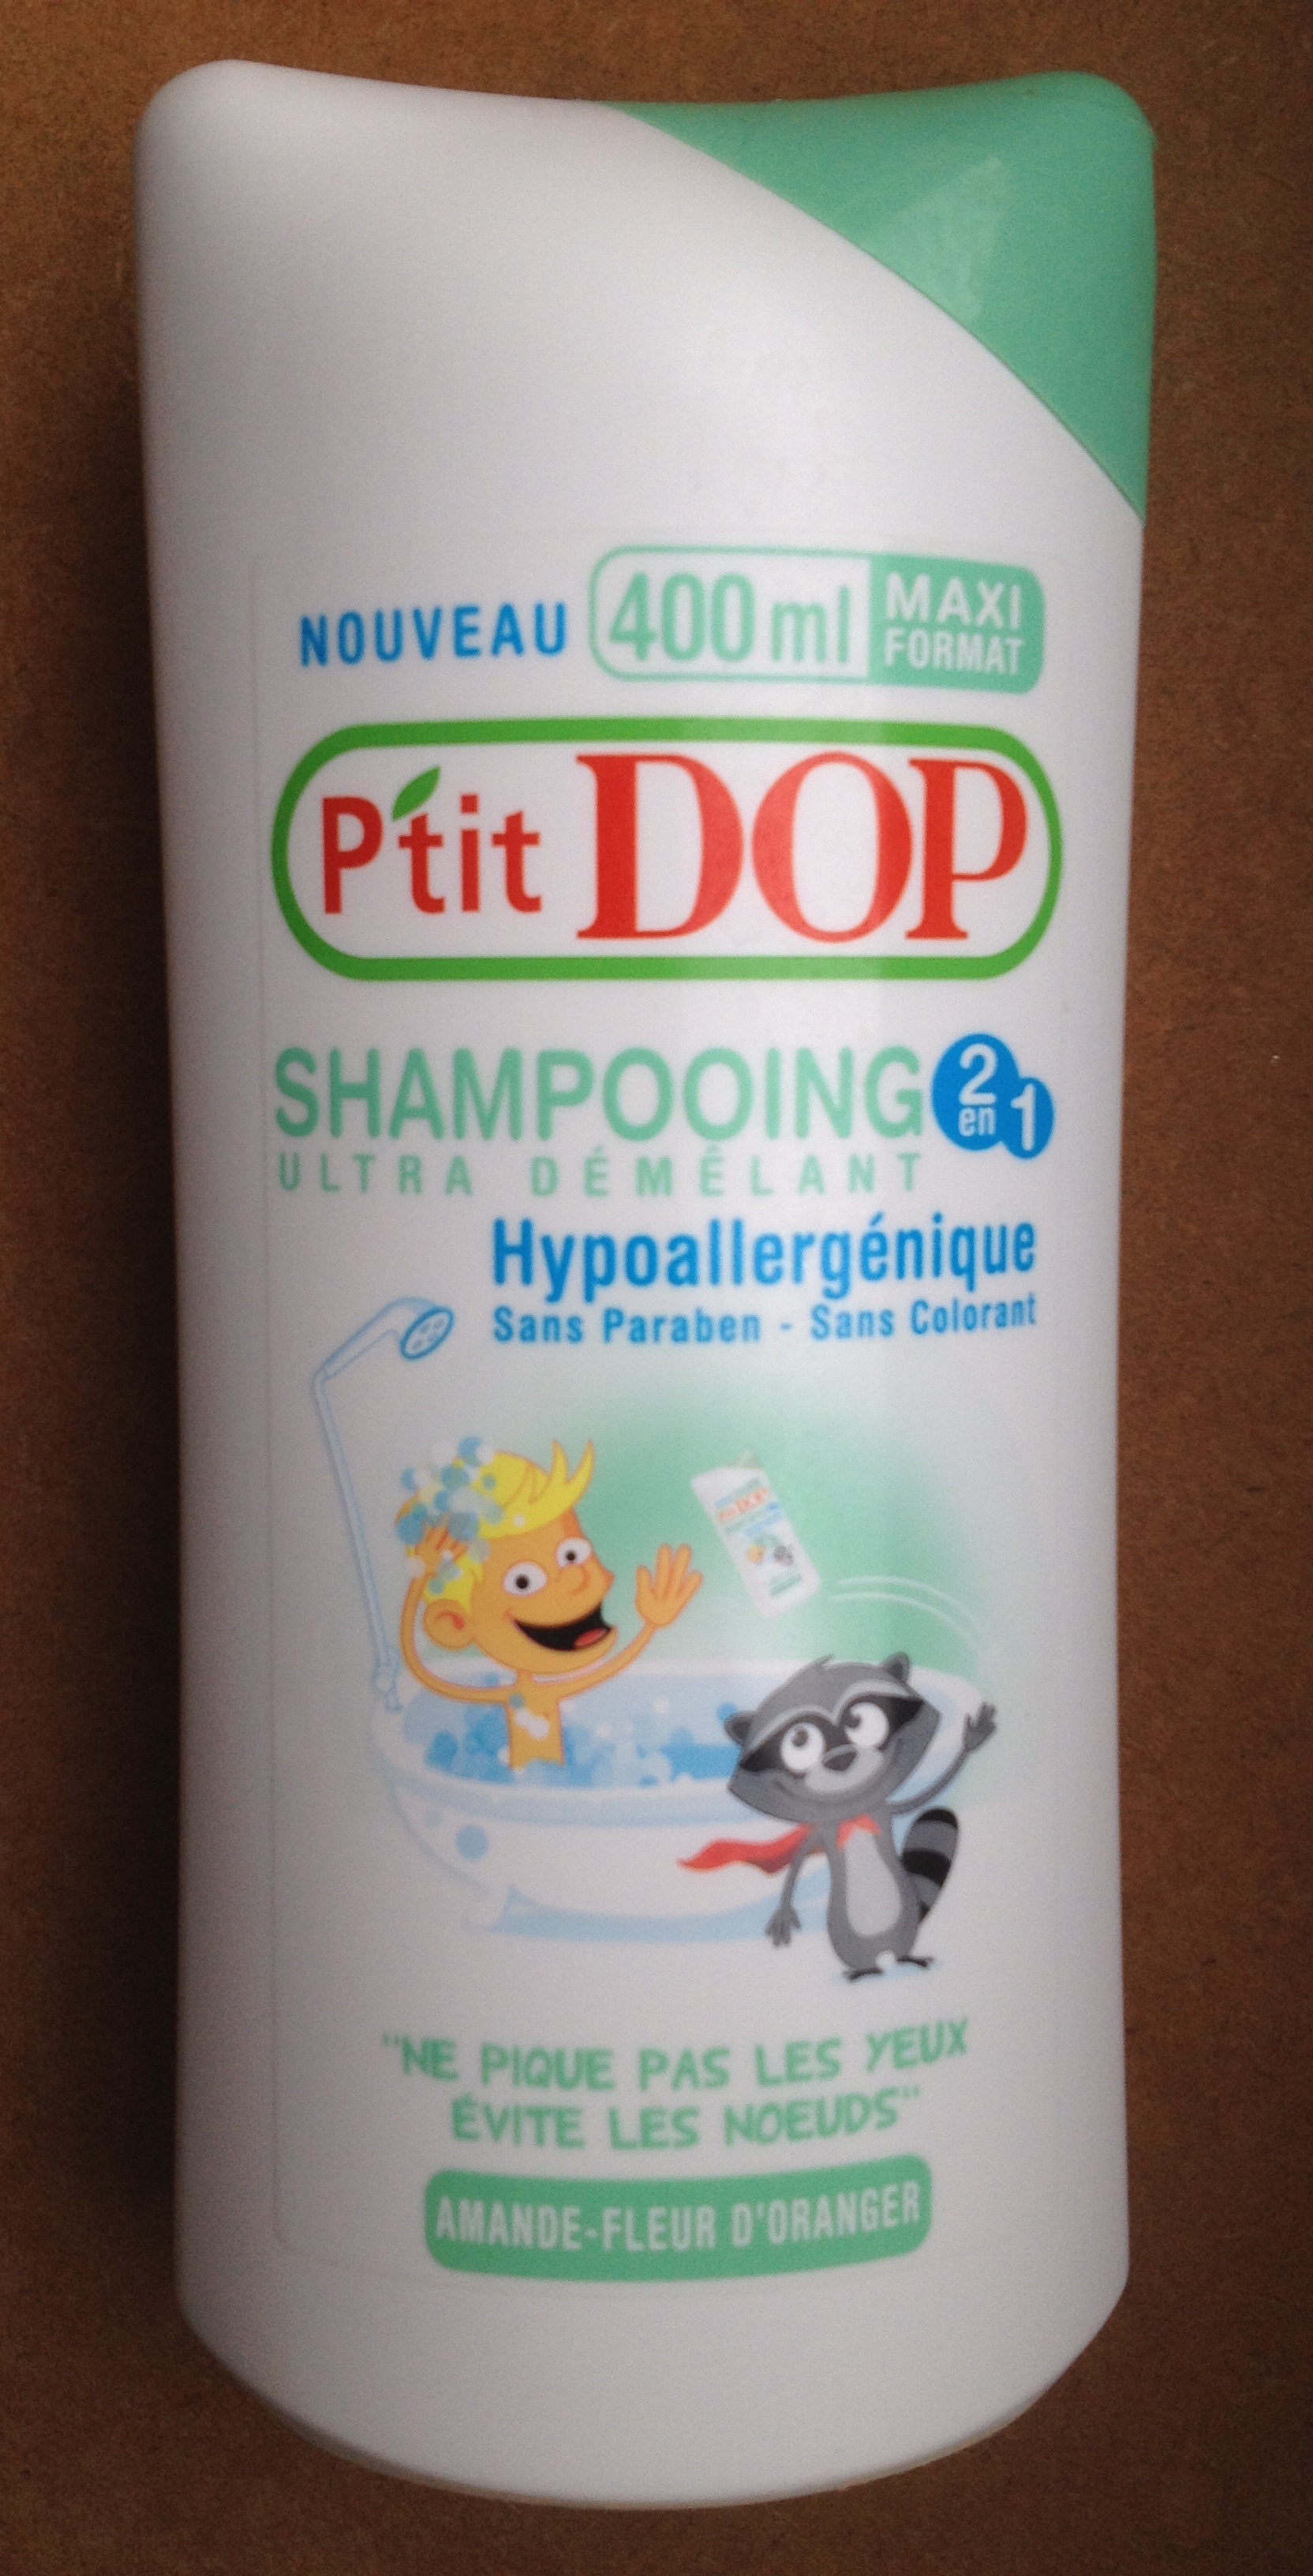 Shampoing 2 en 1 ultra démêlant Amande - Fleur d'Oranger - Produto - fr